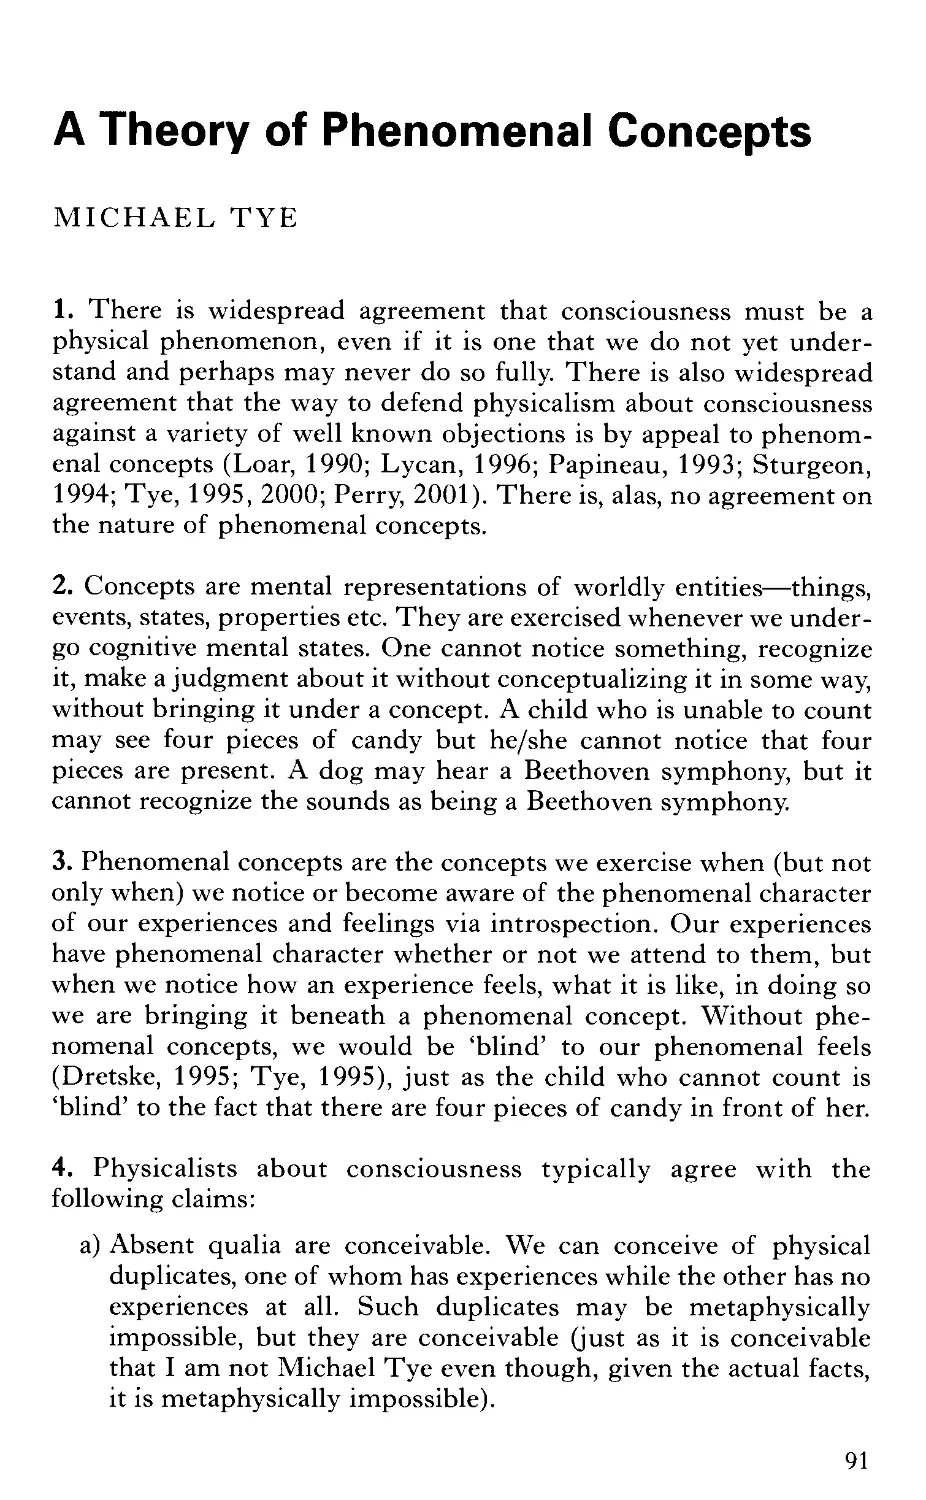 A Theory of Phenomenal Concepts / MICHAEL TYE